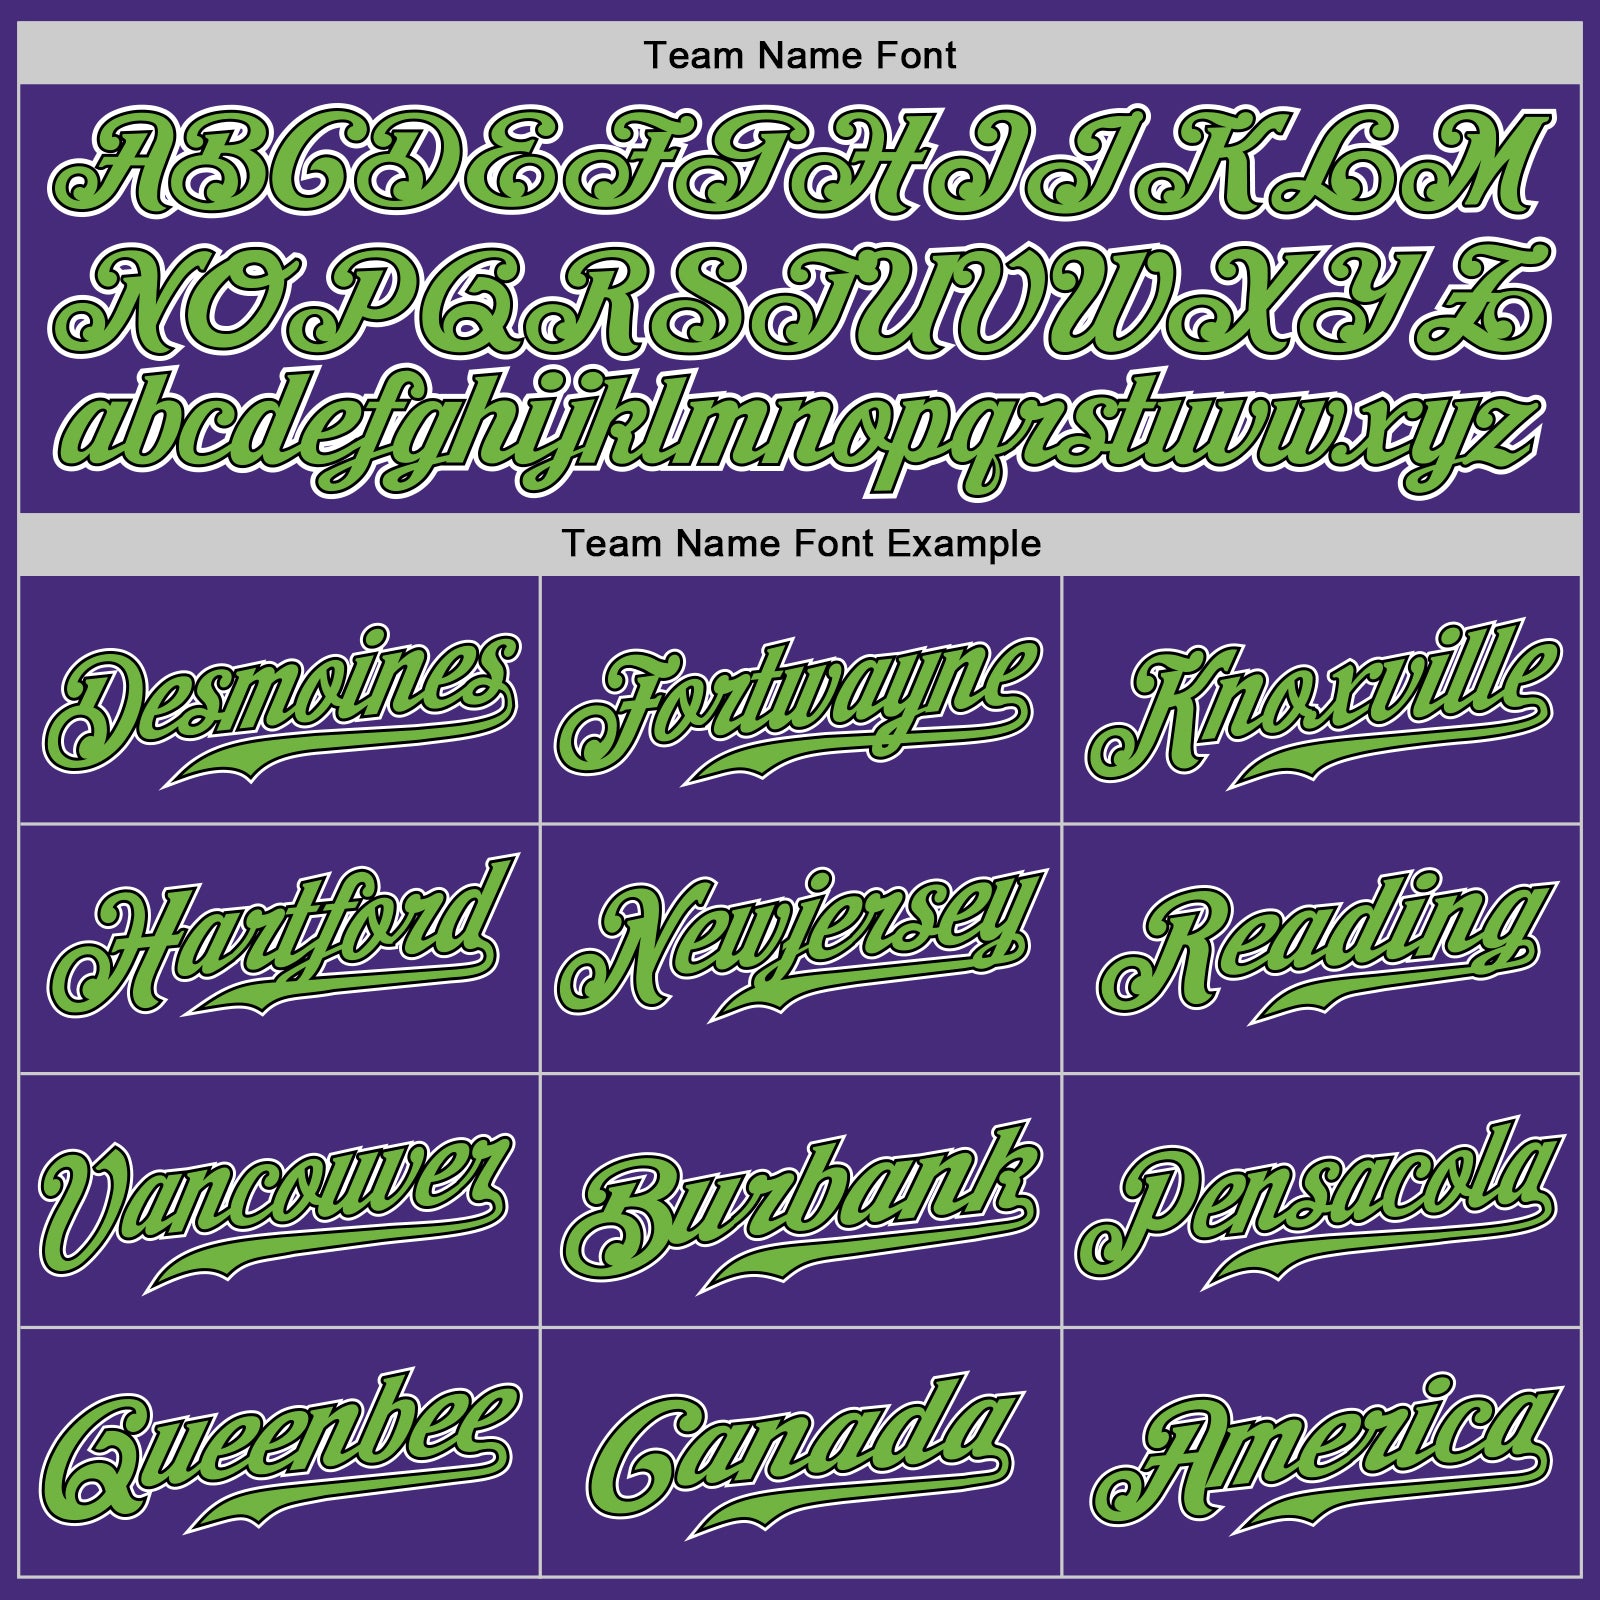 Cheap Custom White Purple-Neon Green Authentic Baseball Jersey Free  Shipping – CustomJerseysPro